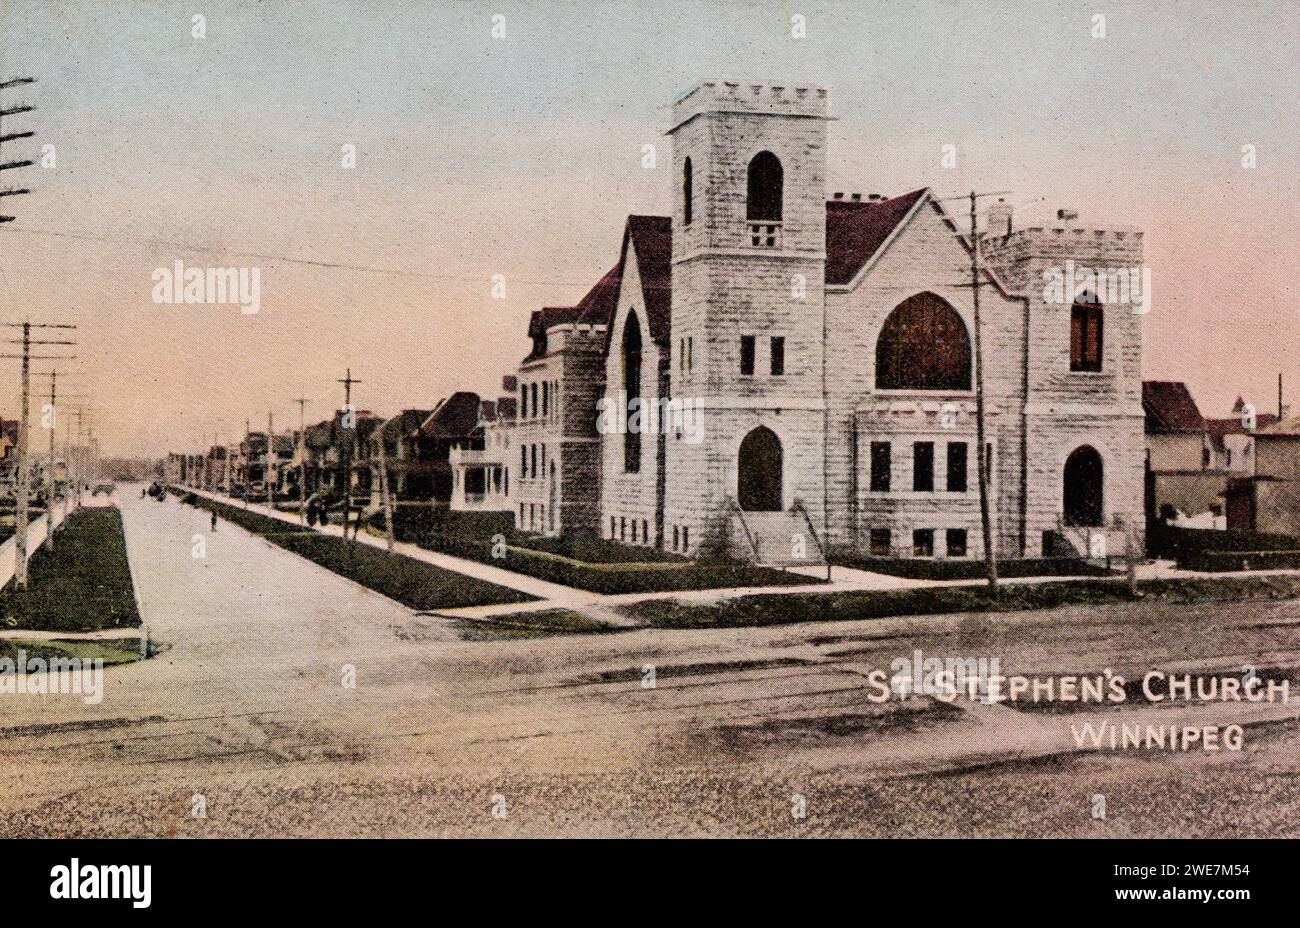 St Stephens Church, Winnipeg Manitoba Canada, approx 1910s postcard. unidentified photographer Stock Photo